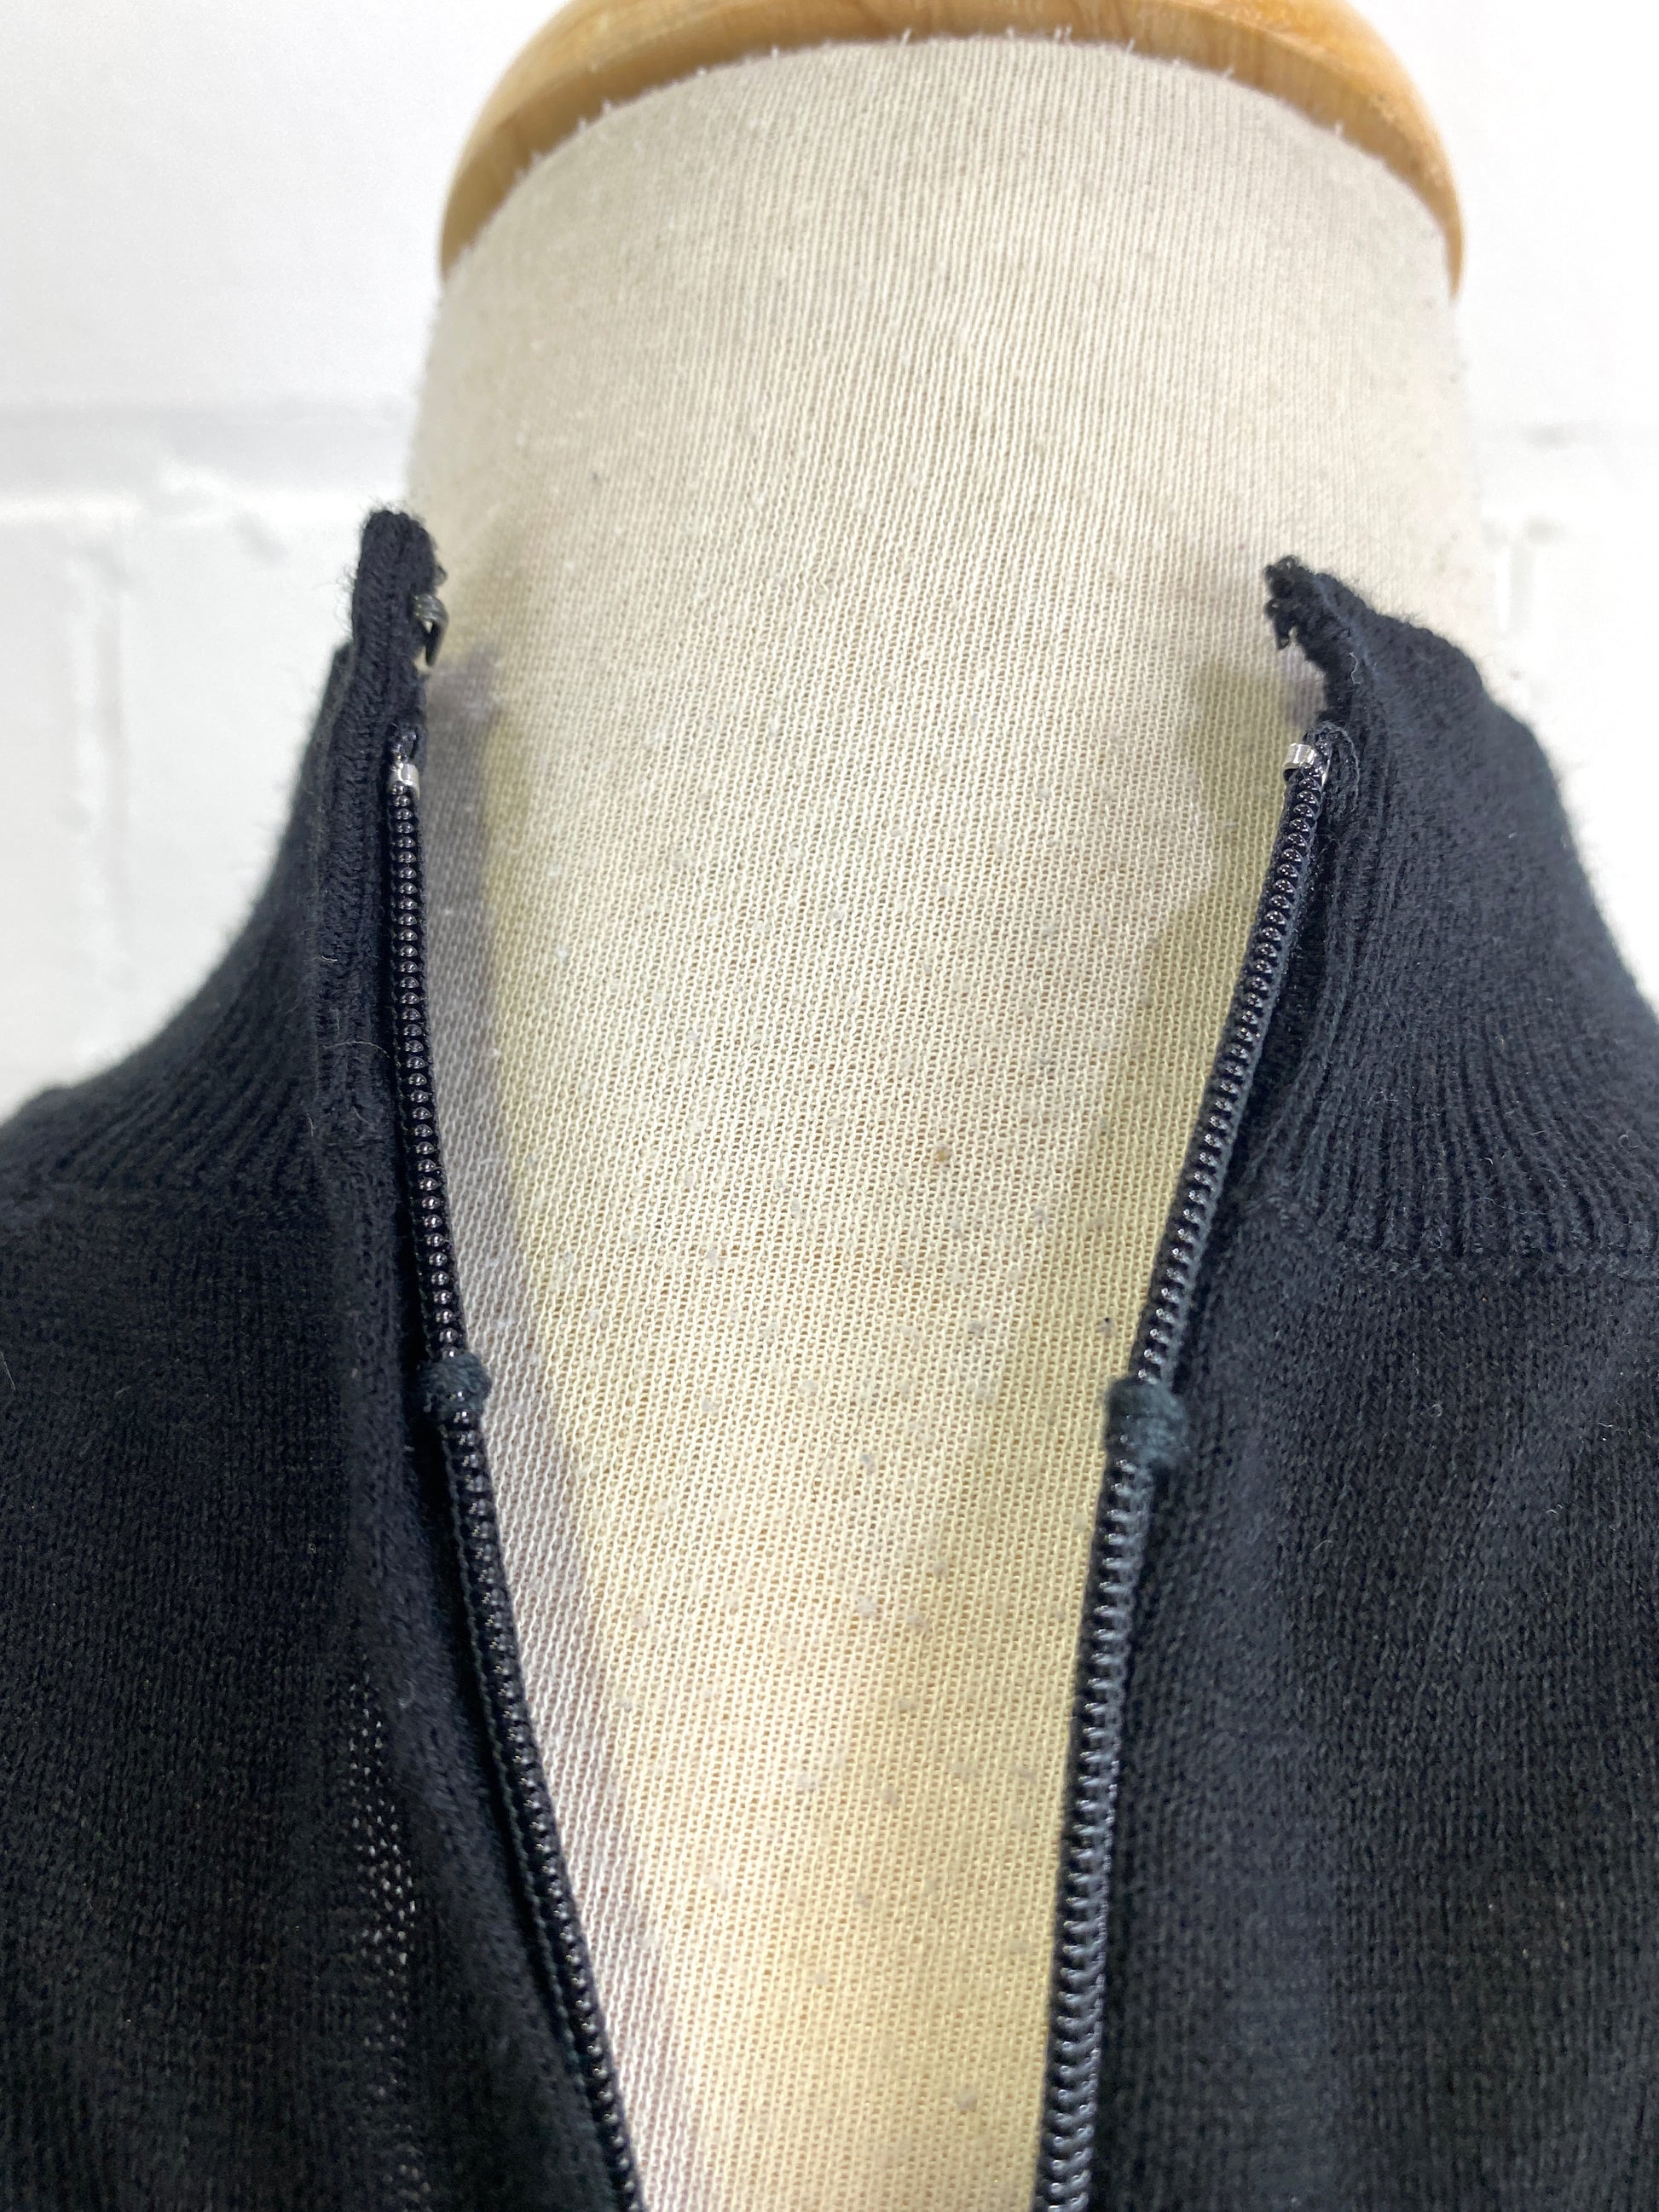 Vintage 60s-Style Black Mock Neck 3/4 Sleeve Mod Knit Top, Small